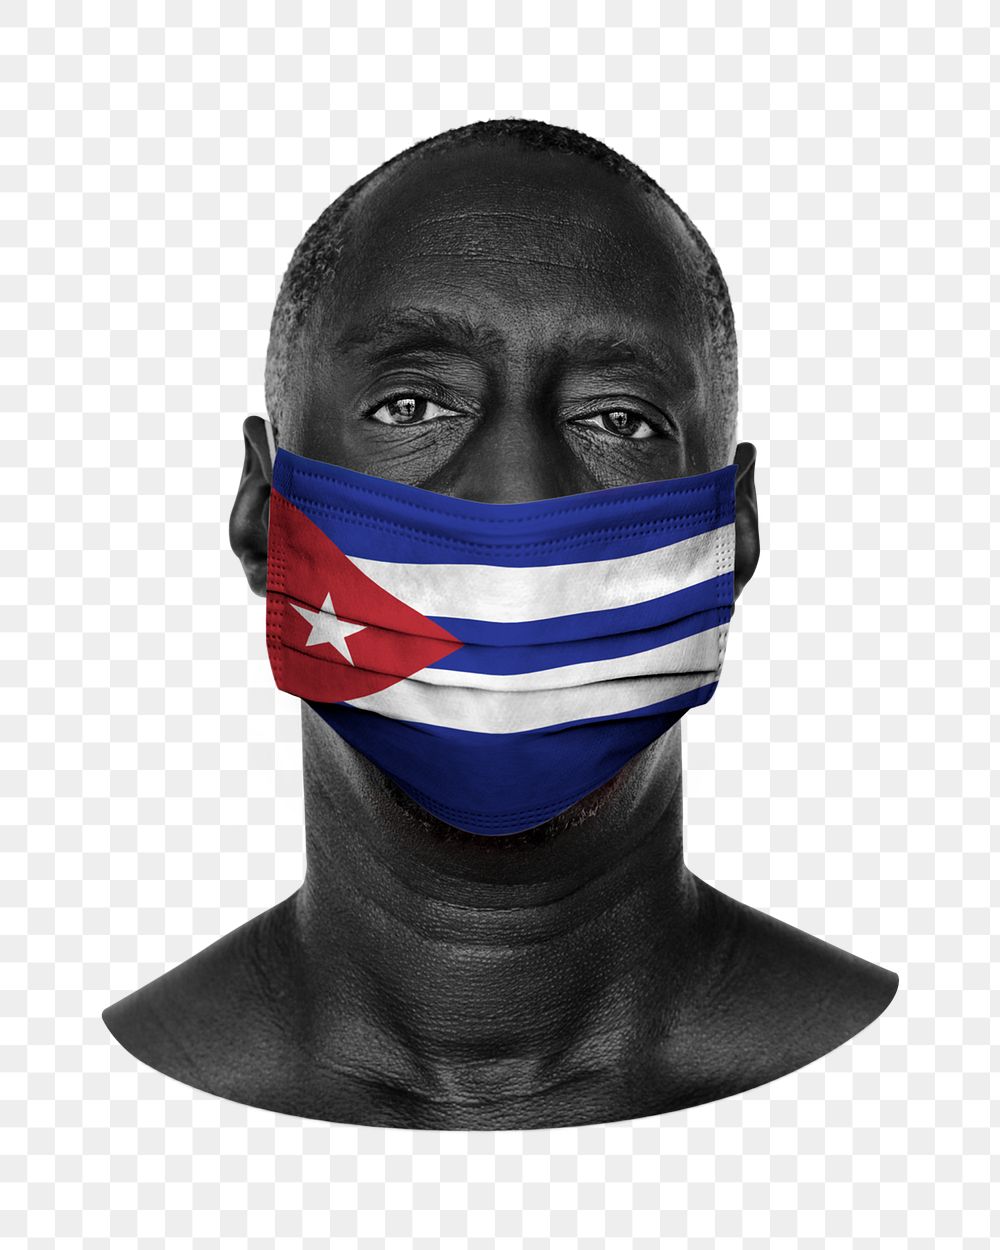 Cuban man png, flag face mask on transparent background